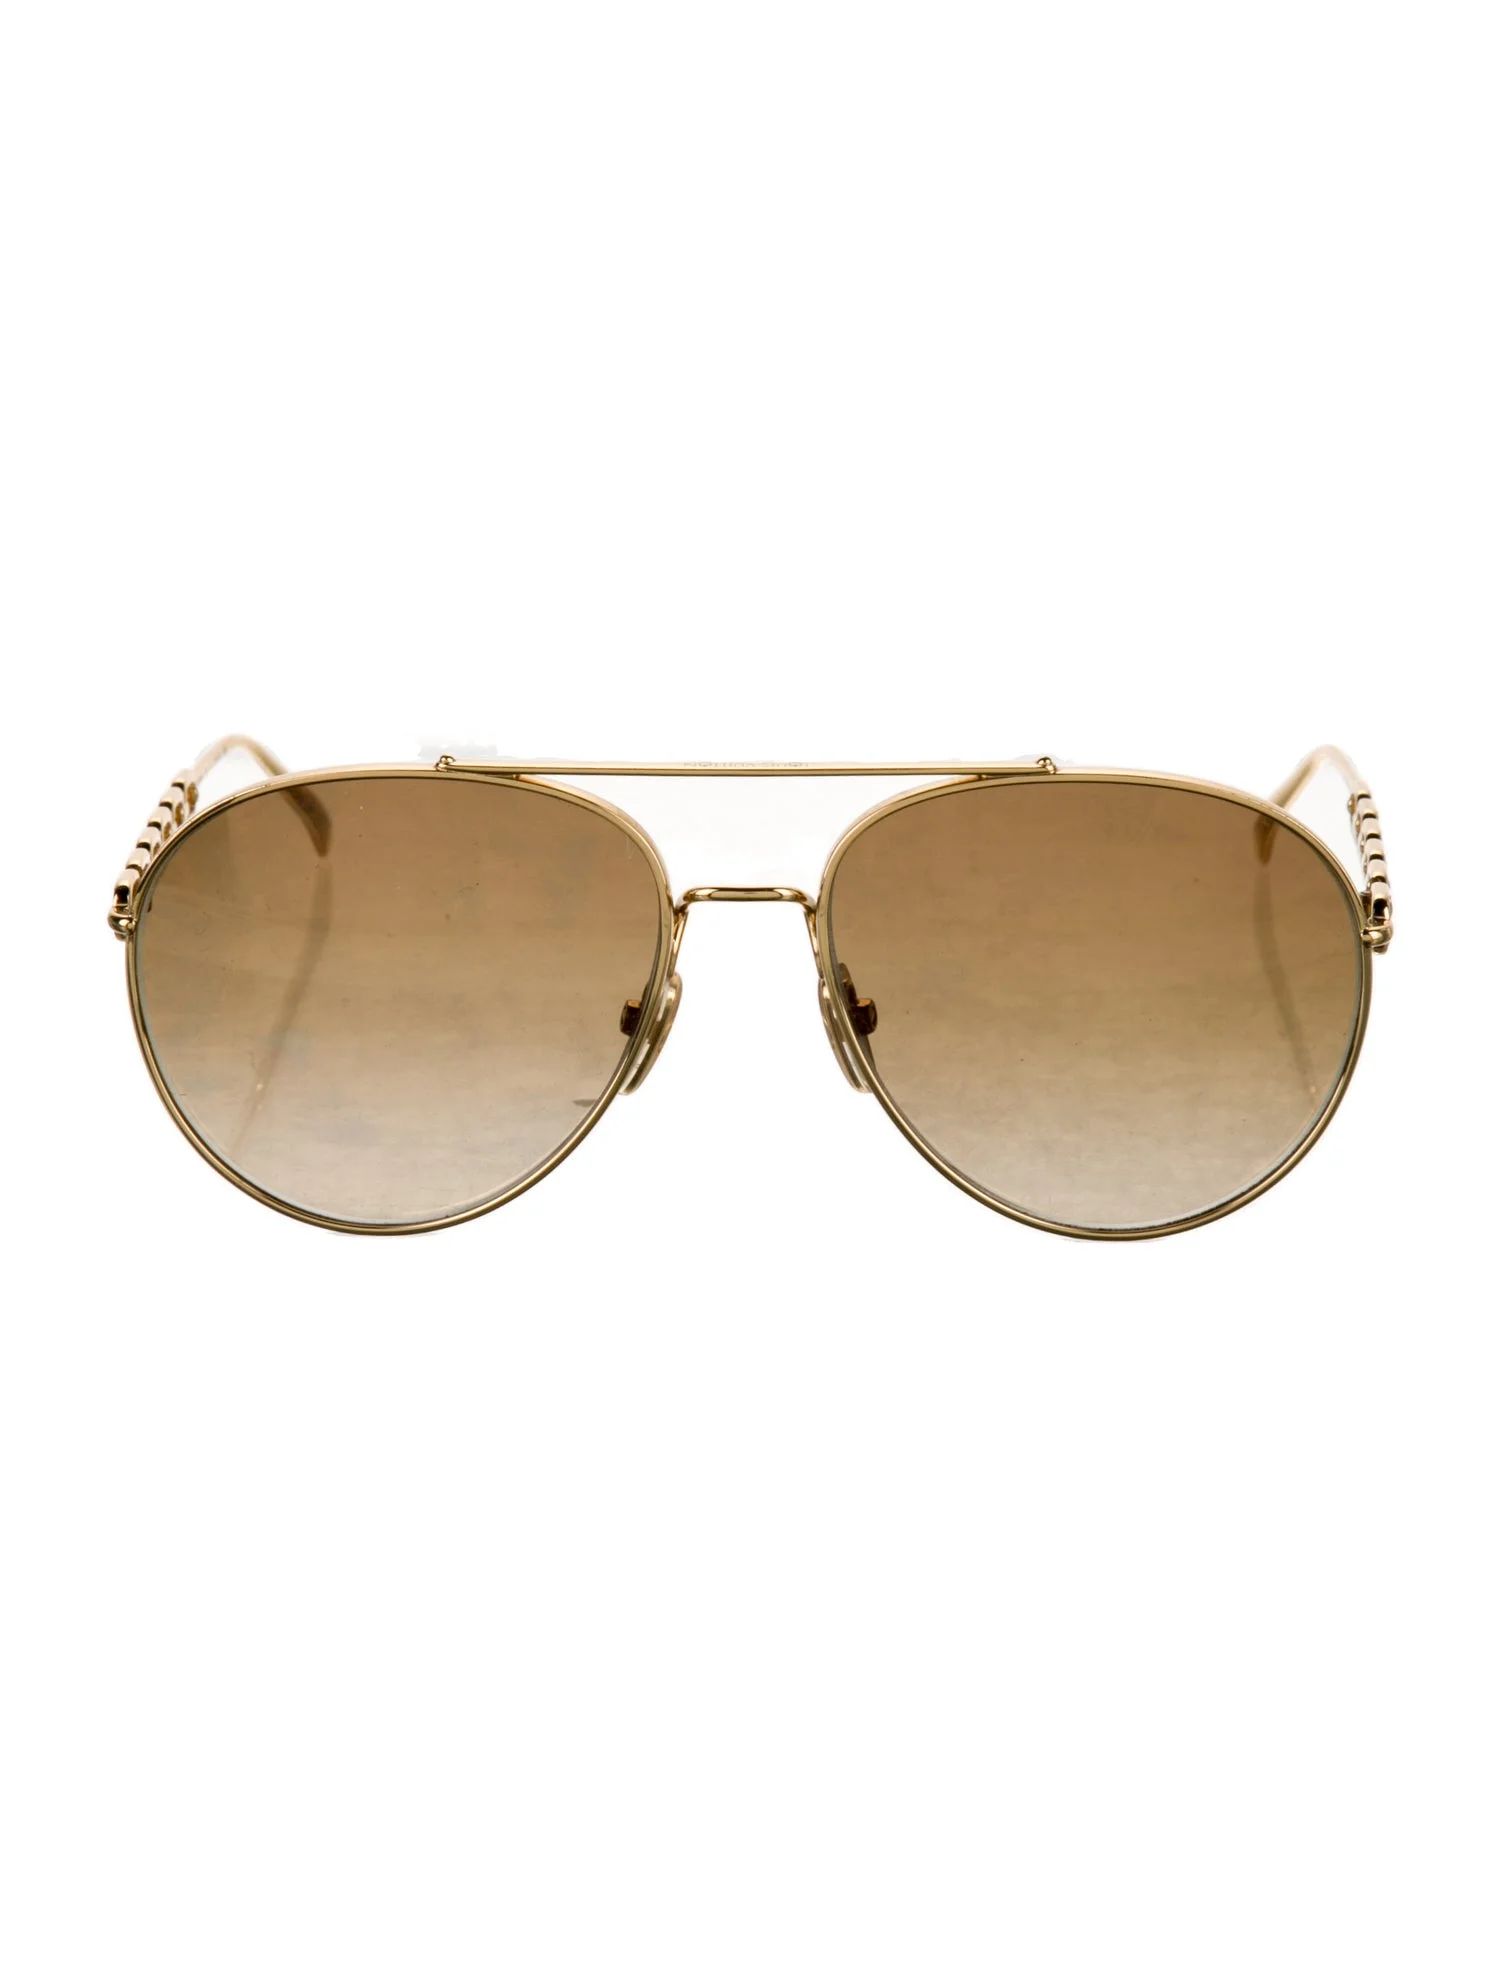 2021 LV Chain Pilot Sunglasses | The RealReal